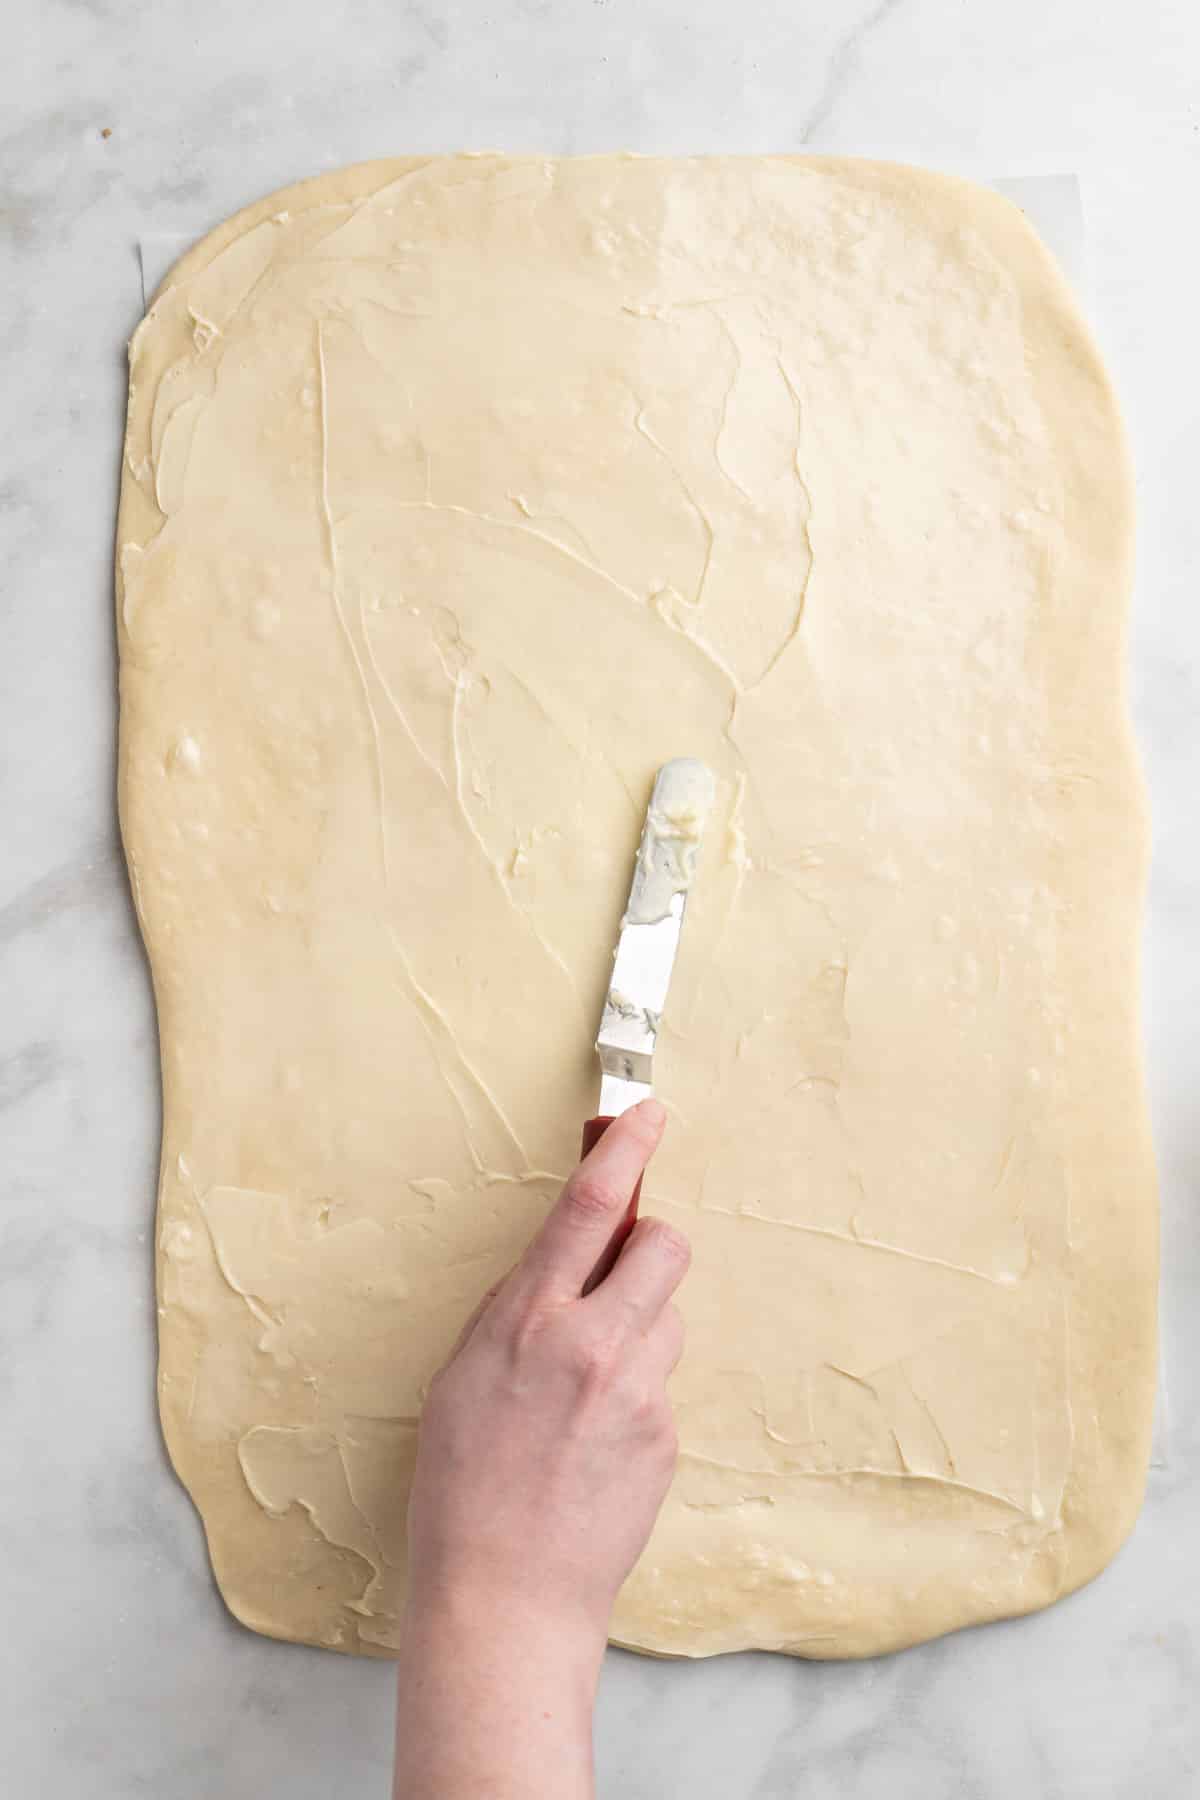 Spreading butter over dough.